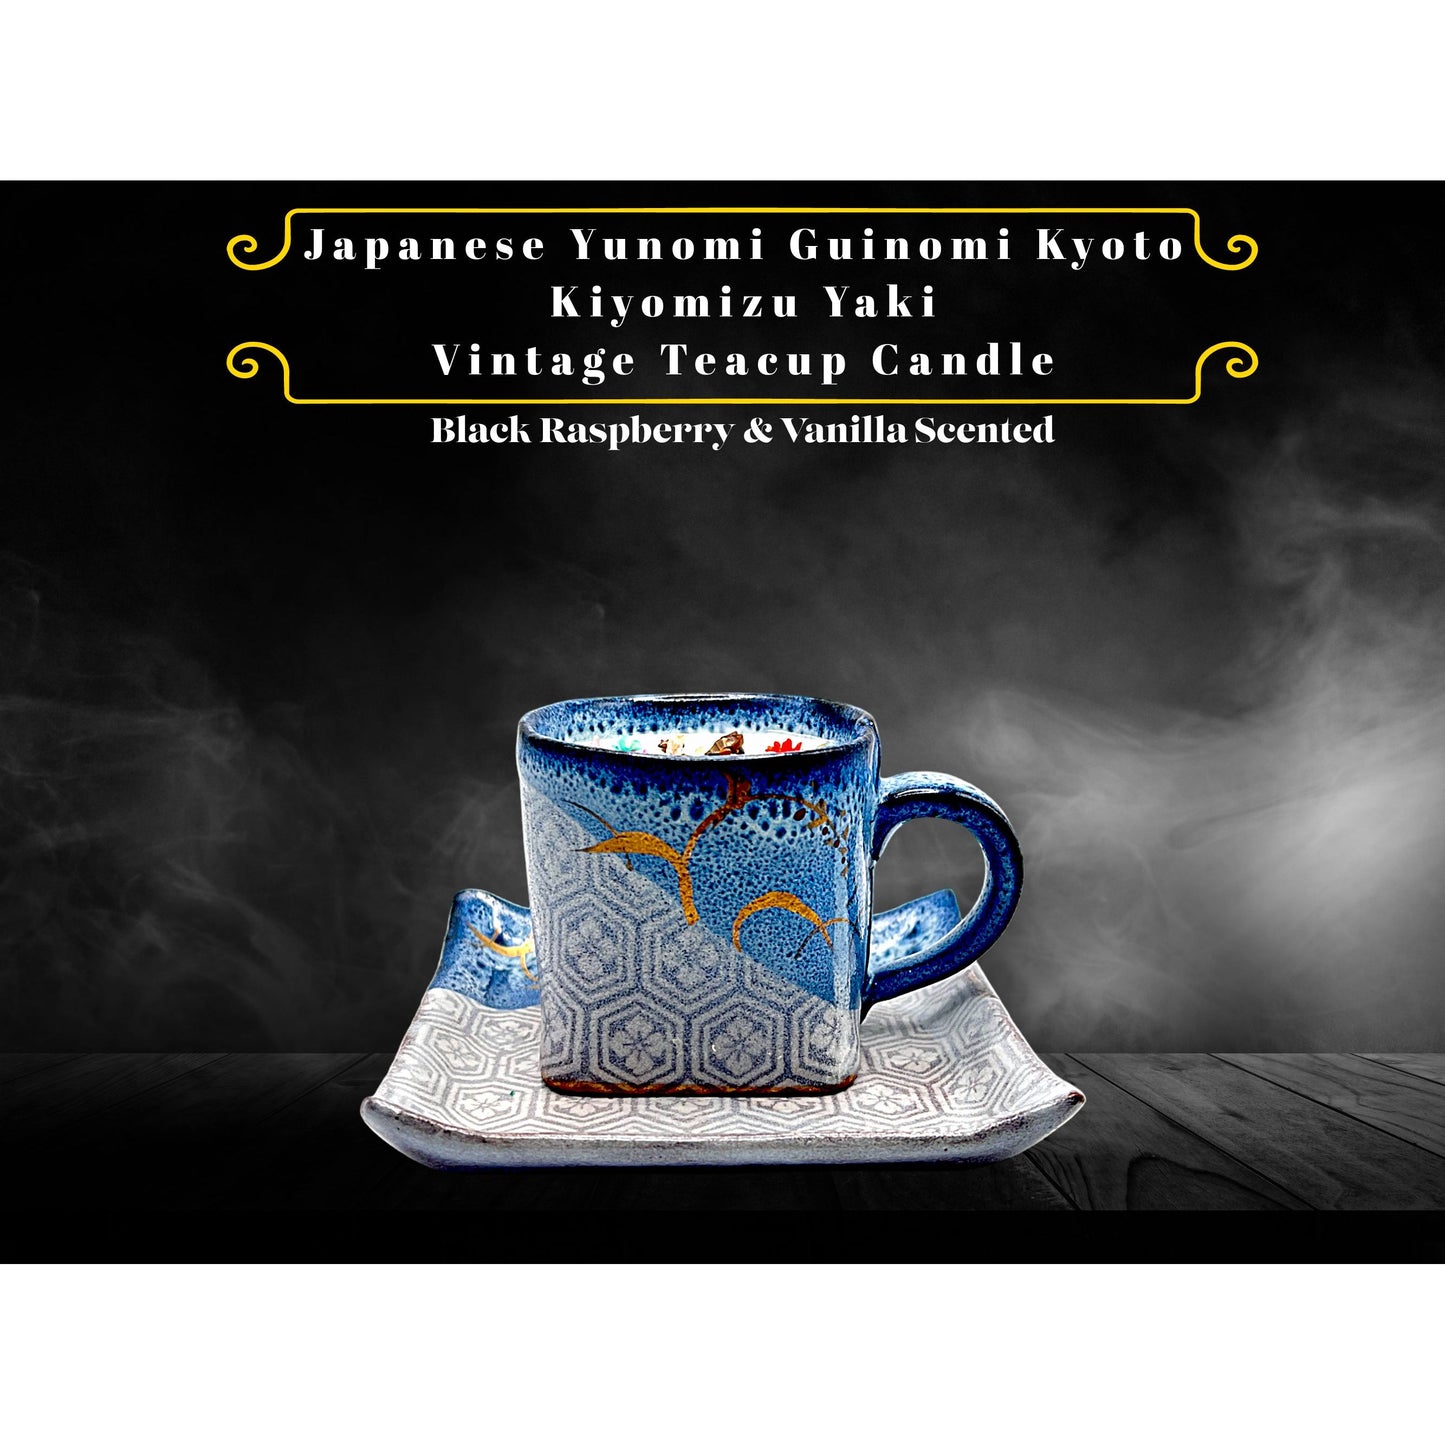 Japanese Yunomi Guinomi Kyoto Kiyomizu yaki Vintage Teacup Candle